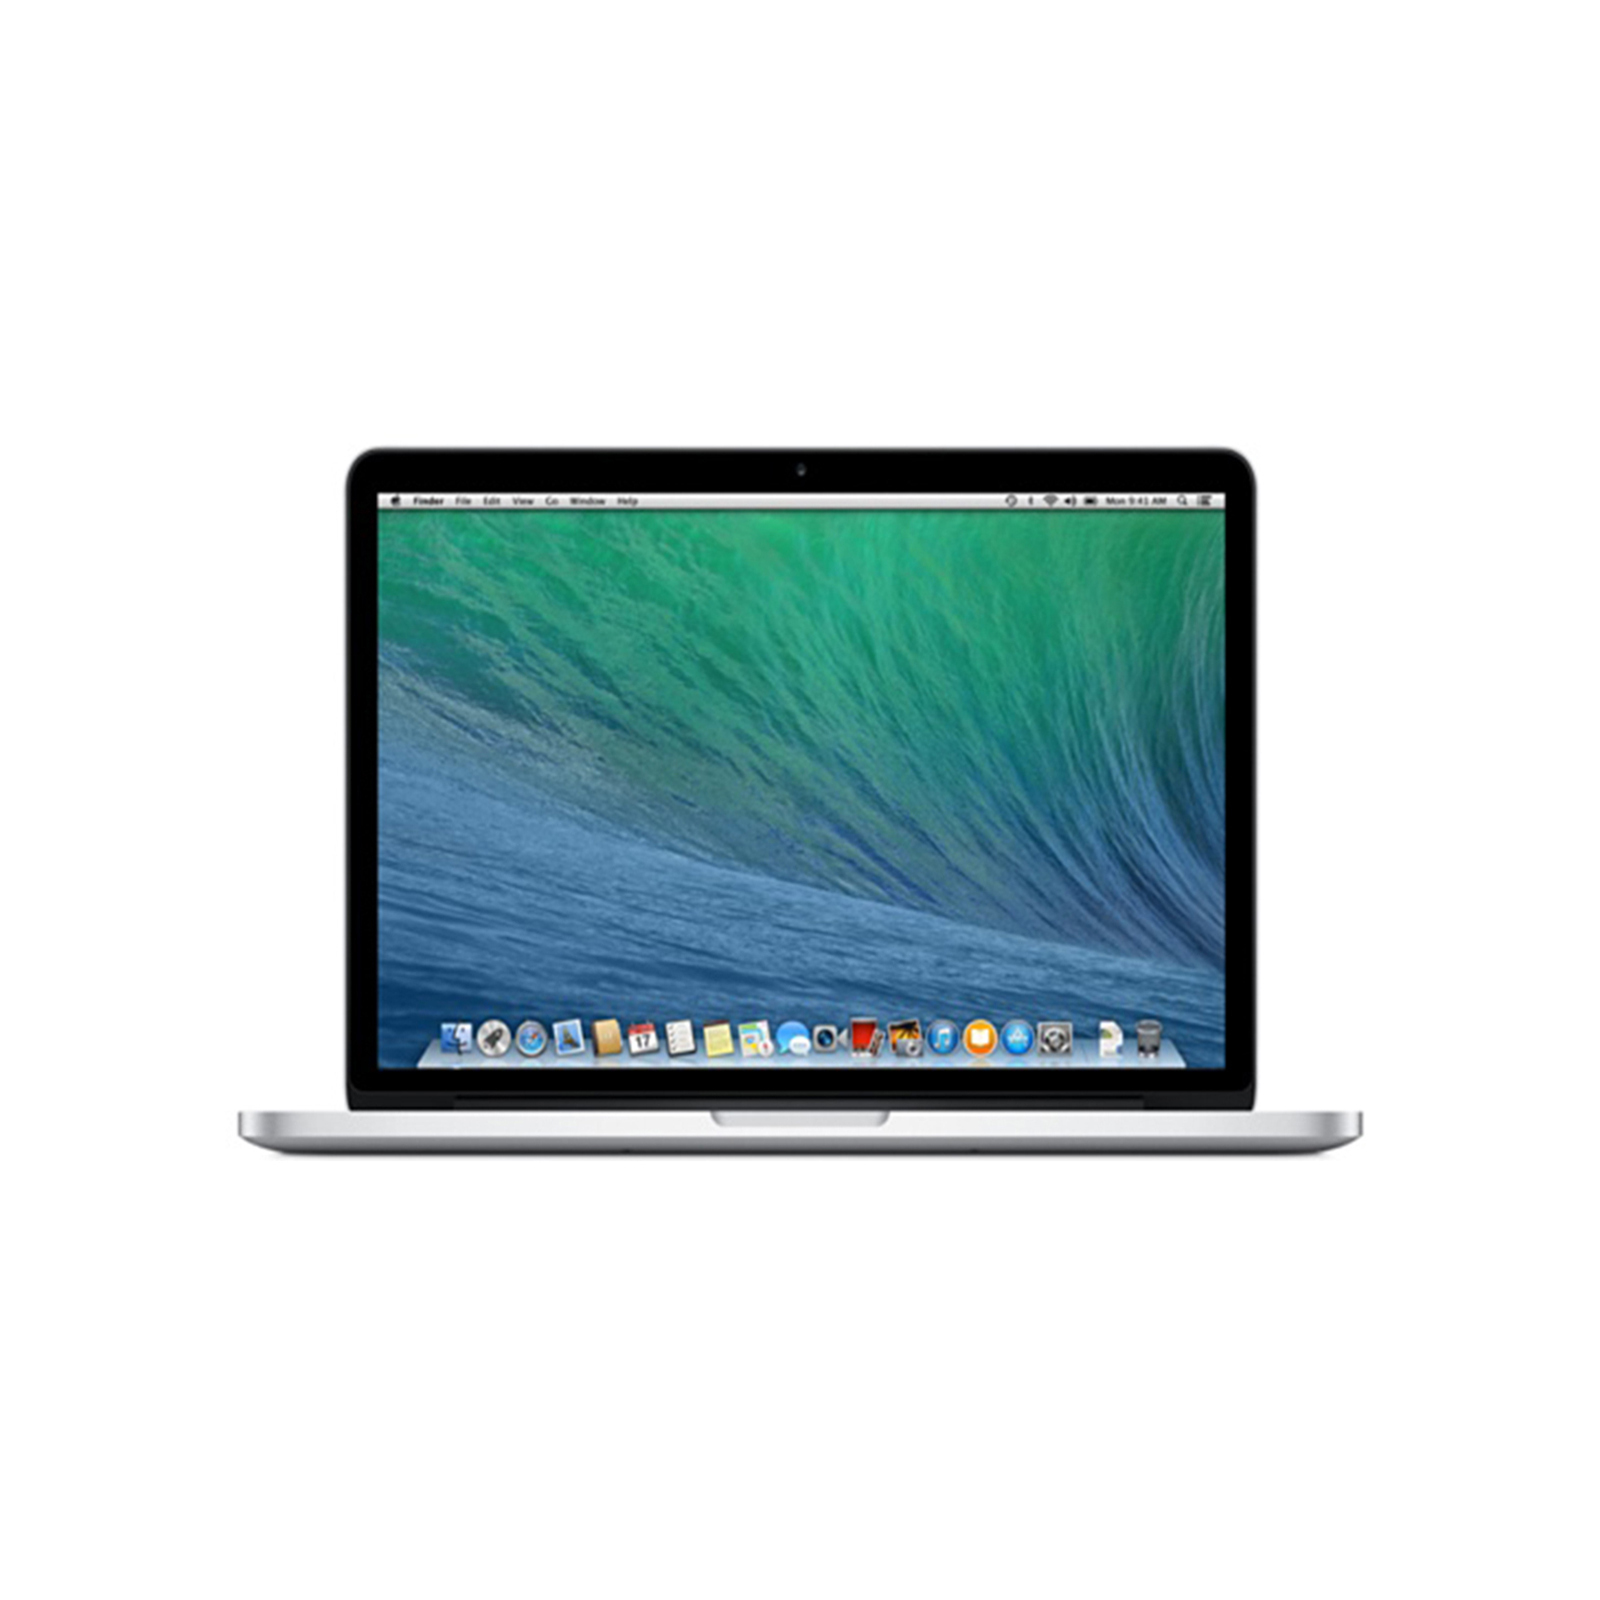 MacBook Pro (Retina, 13-inch, Mid 2014) Intel Core i5 2.6 GHz 8GB 256GB